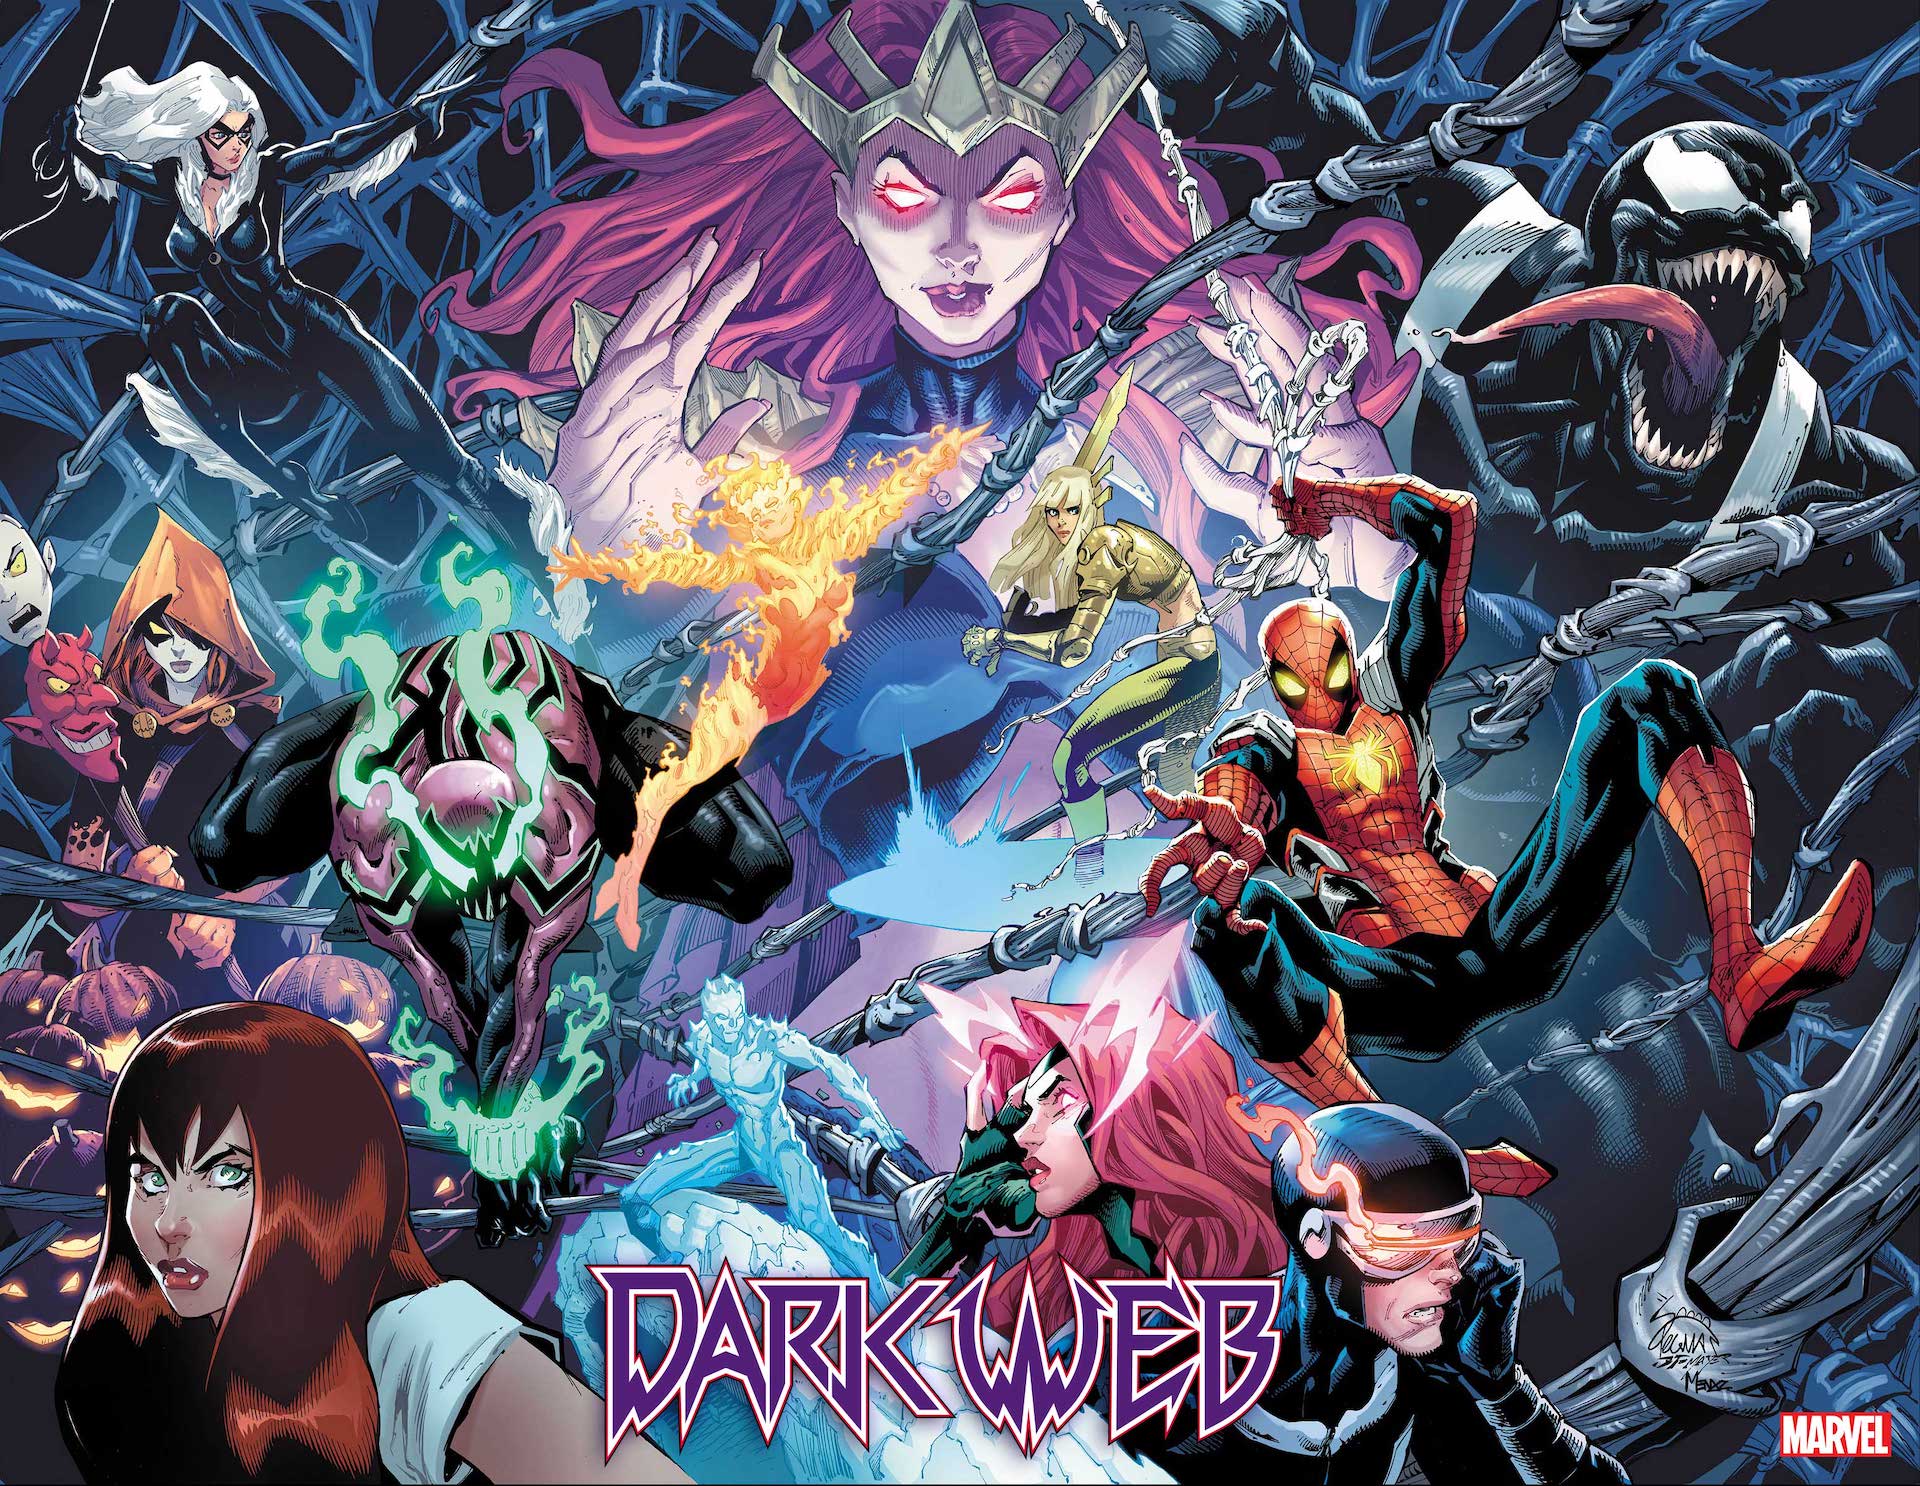 SDCC '22: Marvel dishes on 'Dark Web' story